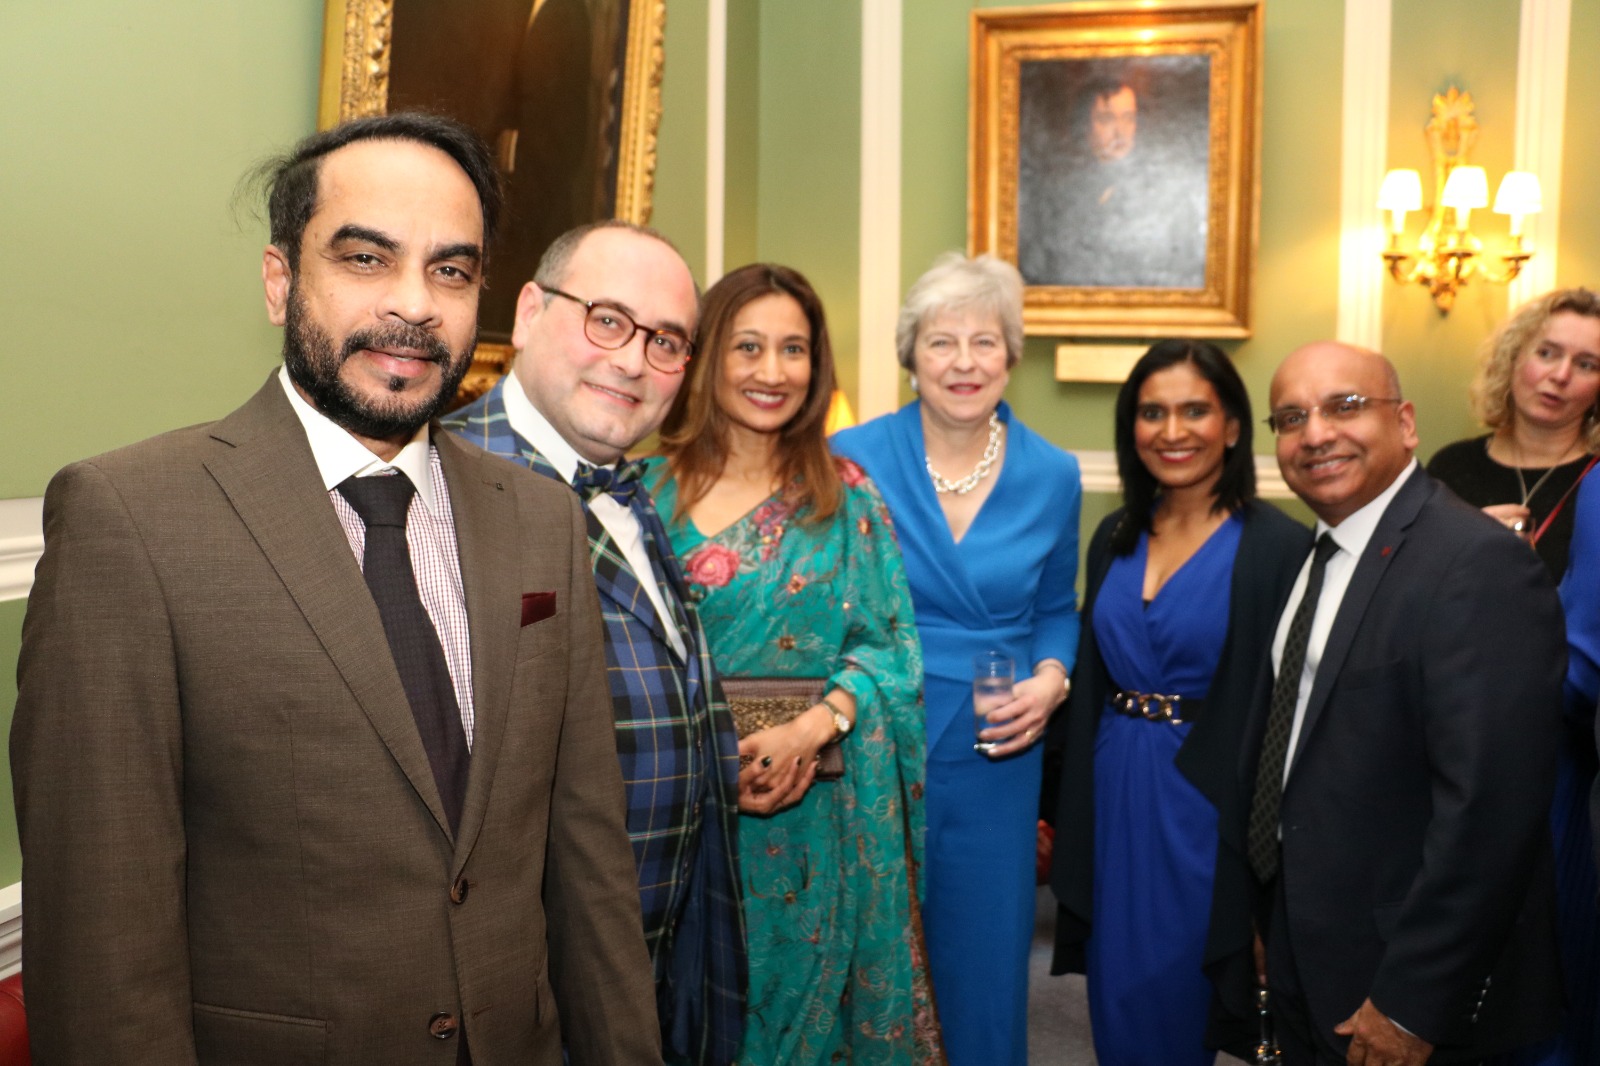 Dr Maurizio-Bragagni OBE with The Rt Hon Theresa May MP